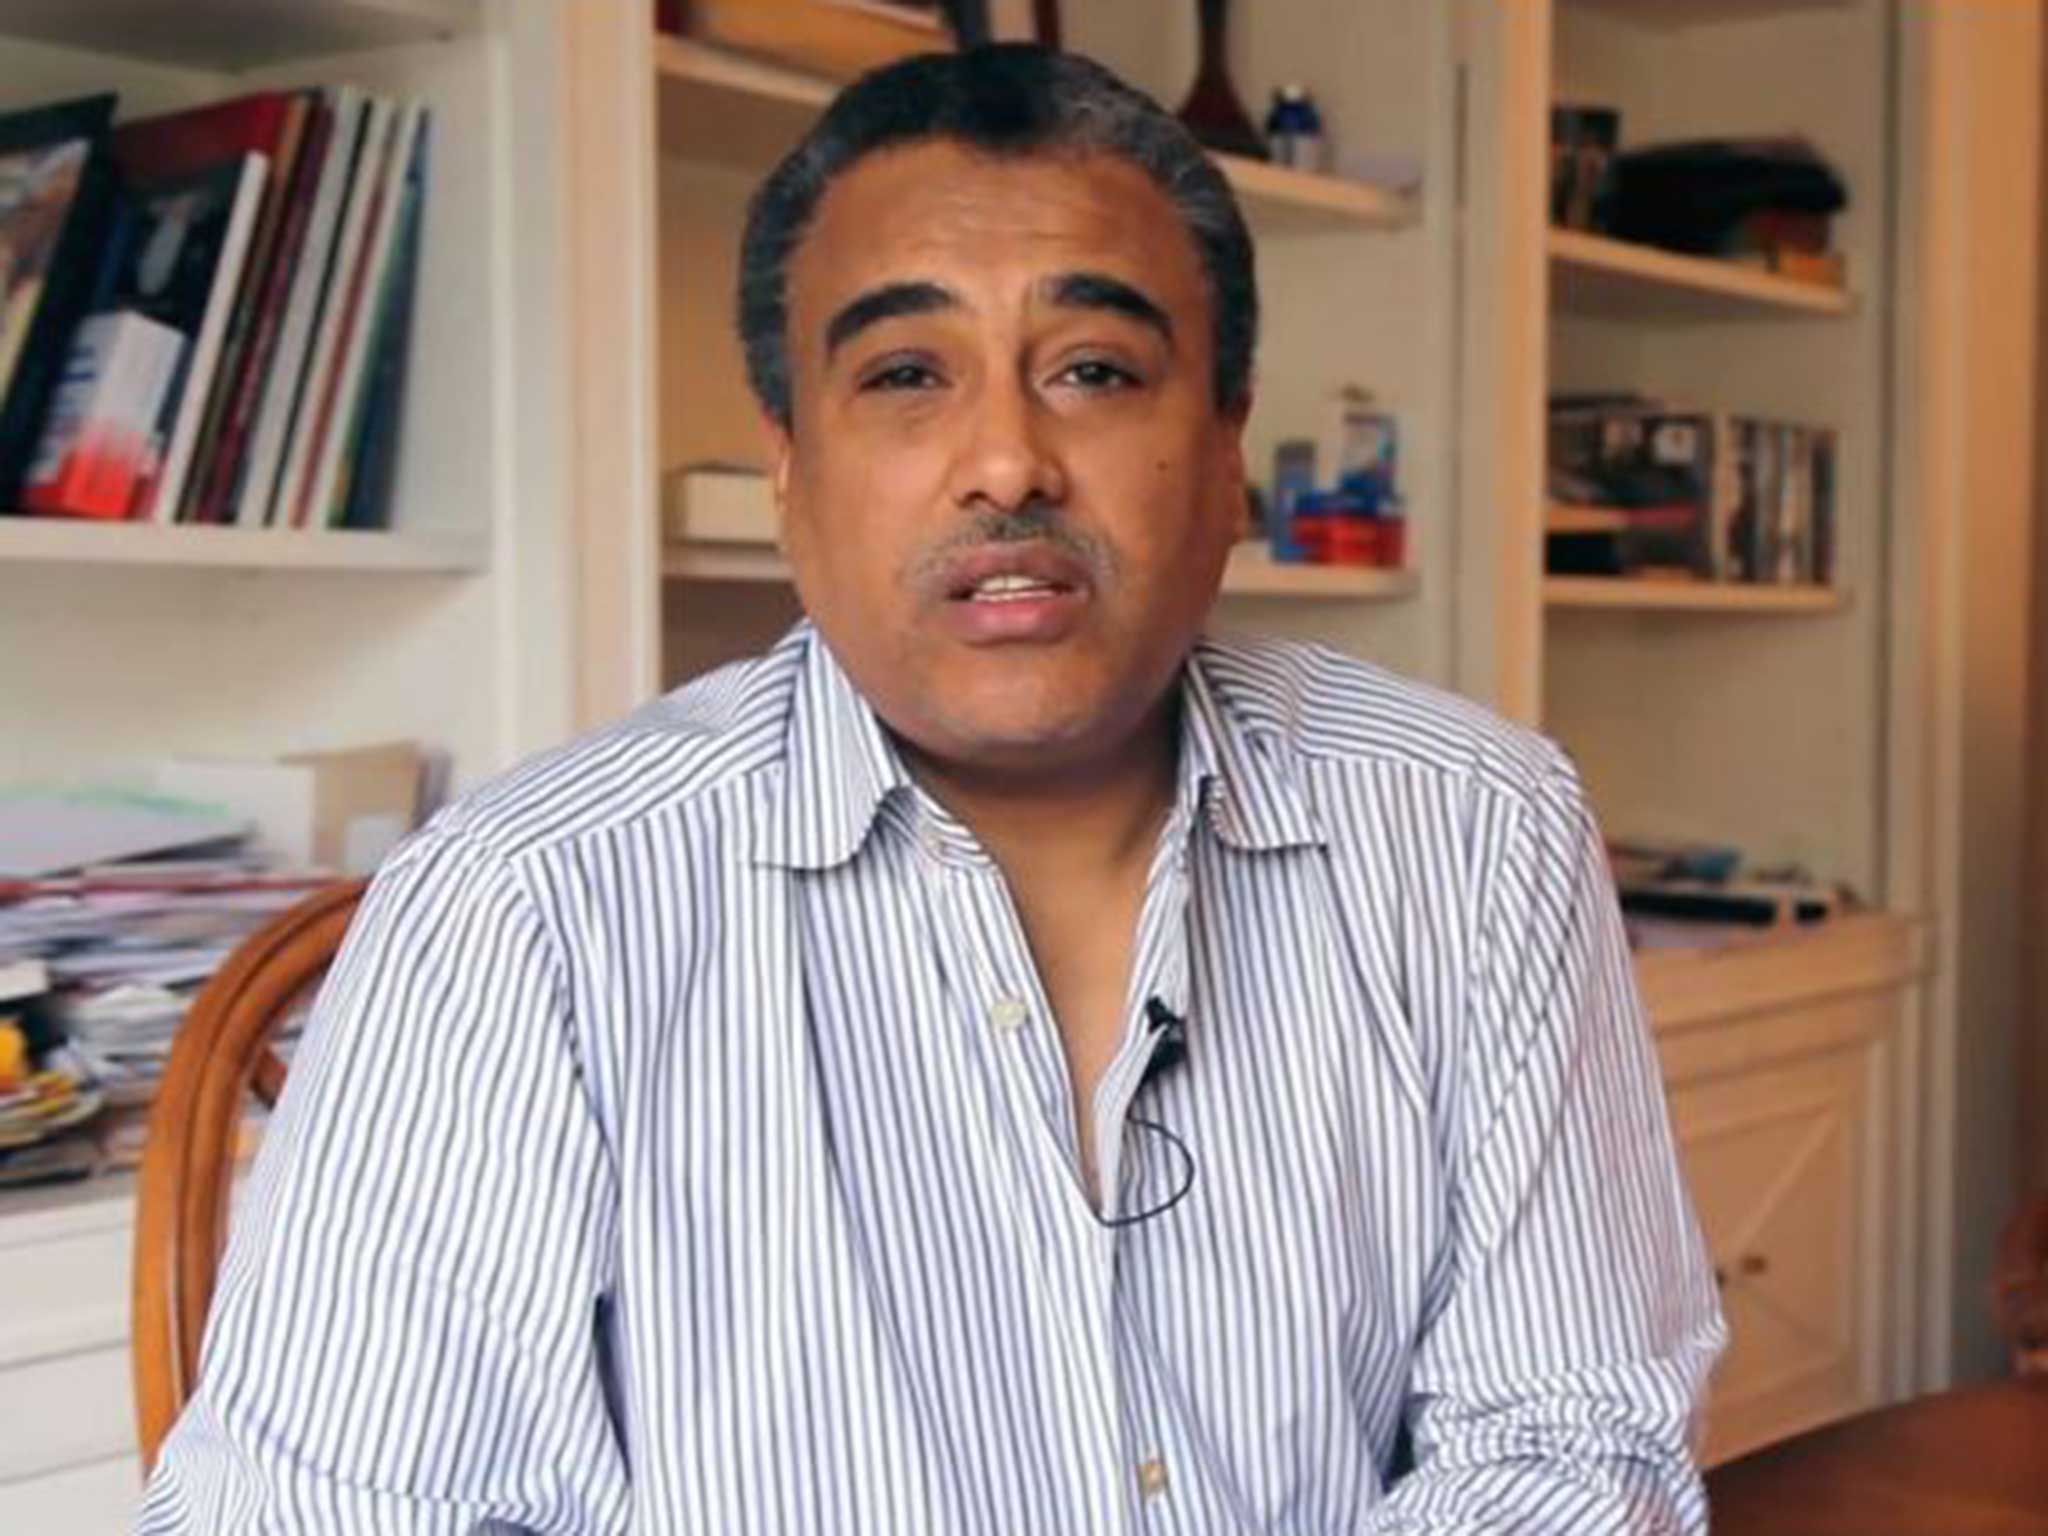 London-based businessman Abdourahman Boreh